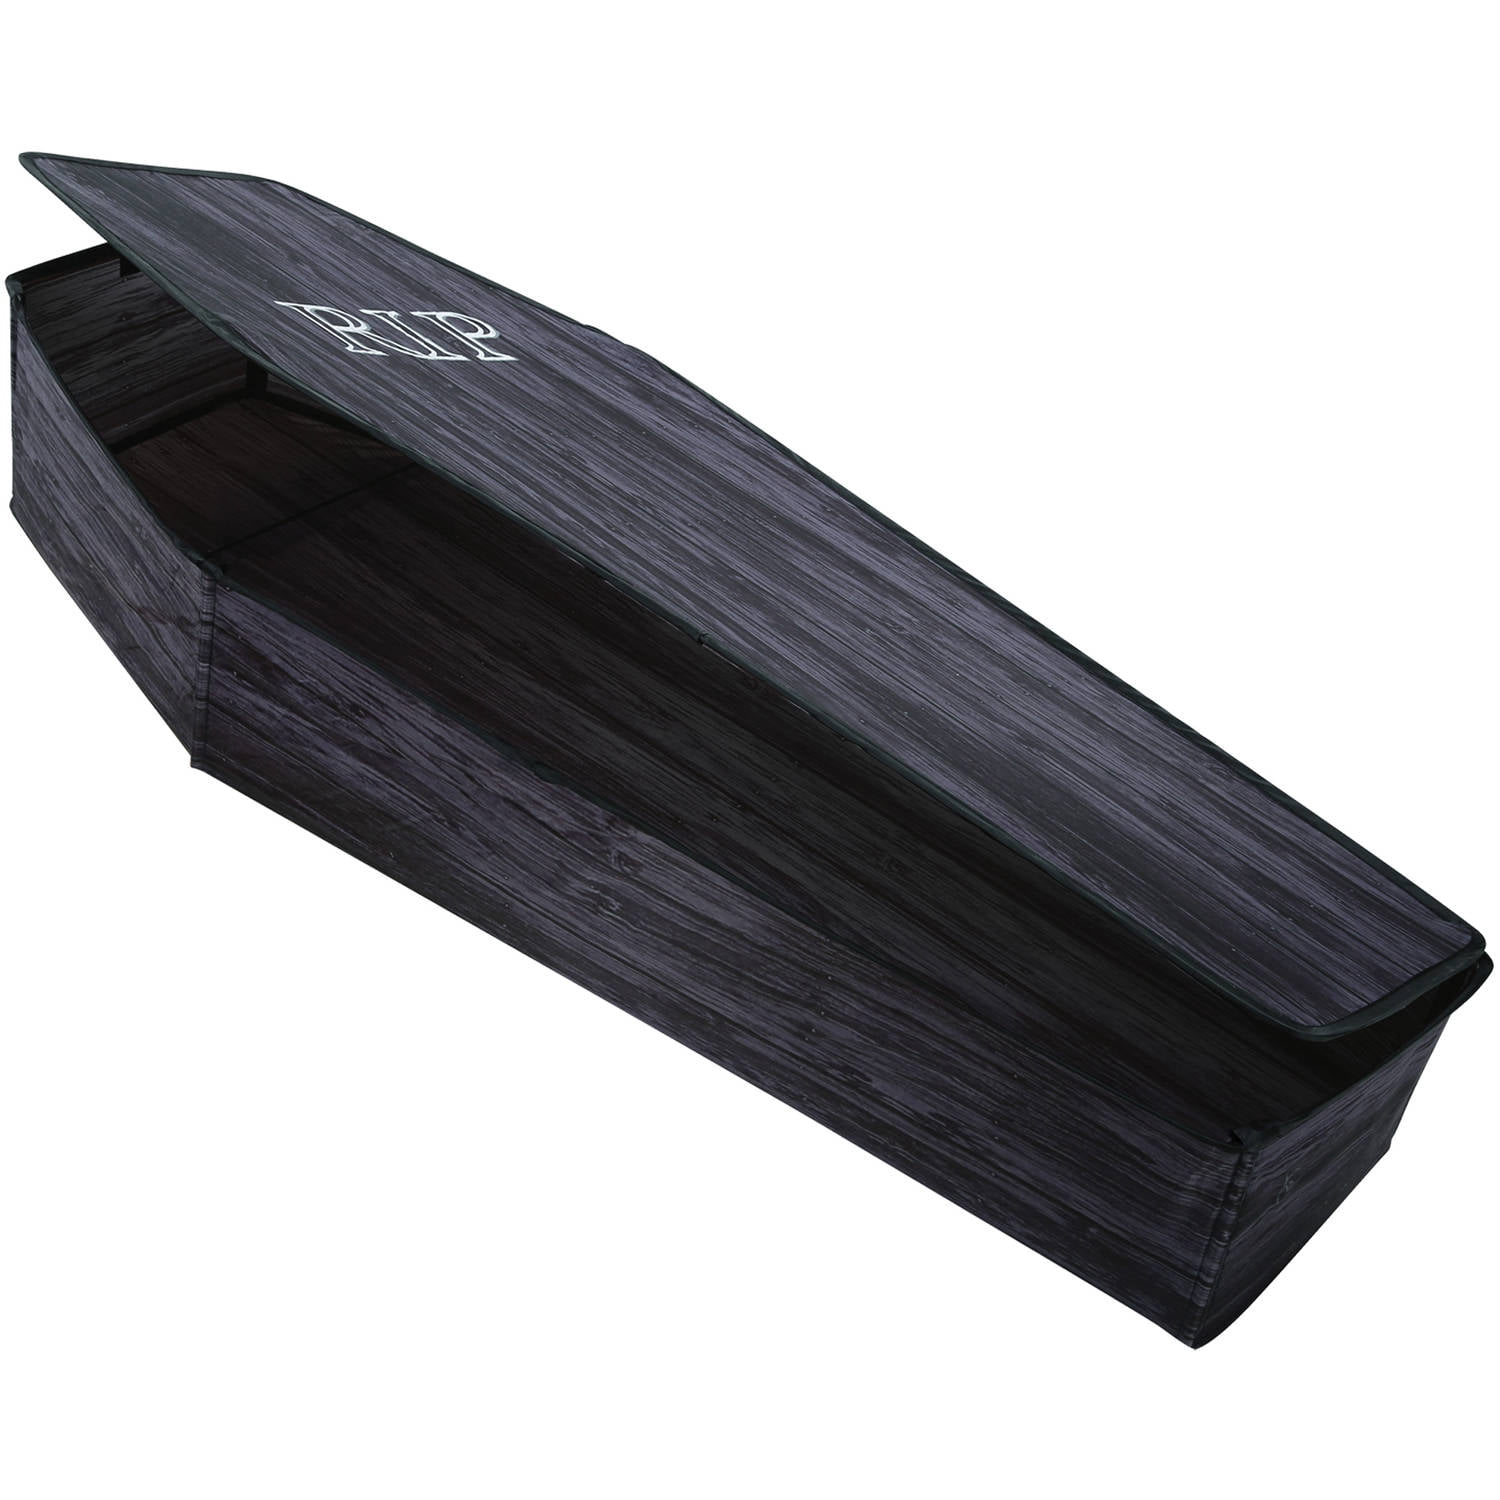 Coffin with Lid Wooden Look Halloween Decoration - Walmart.com